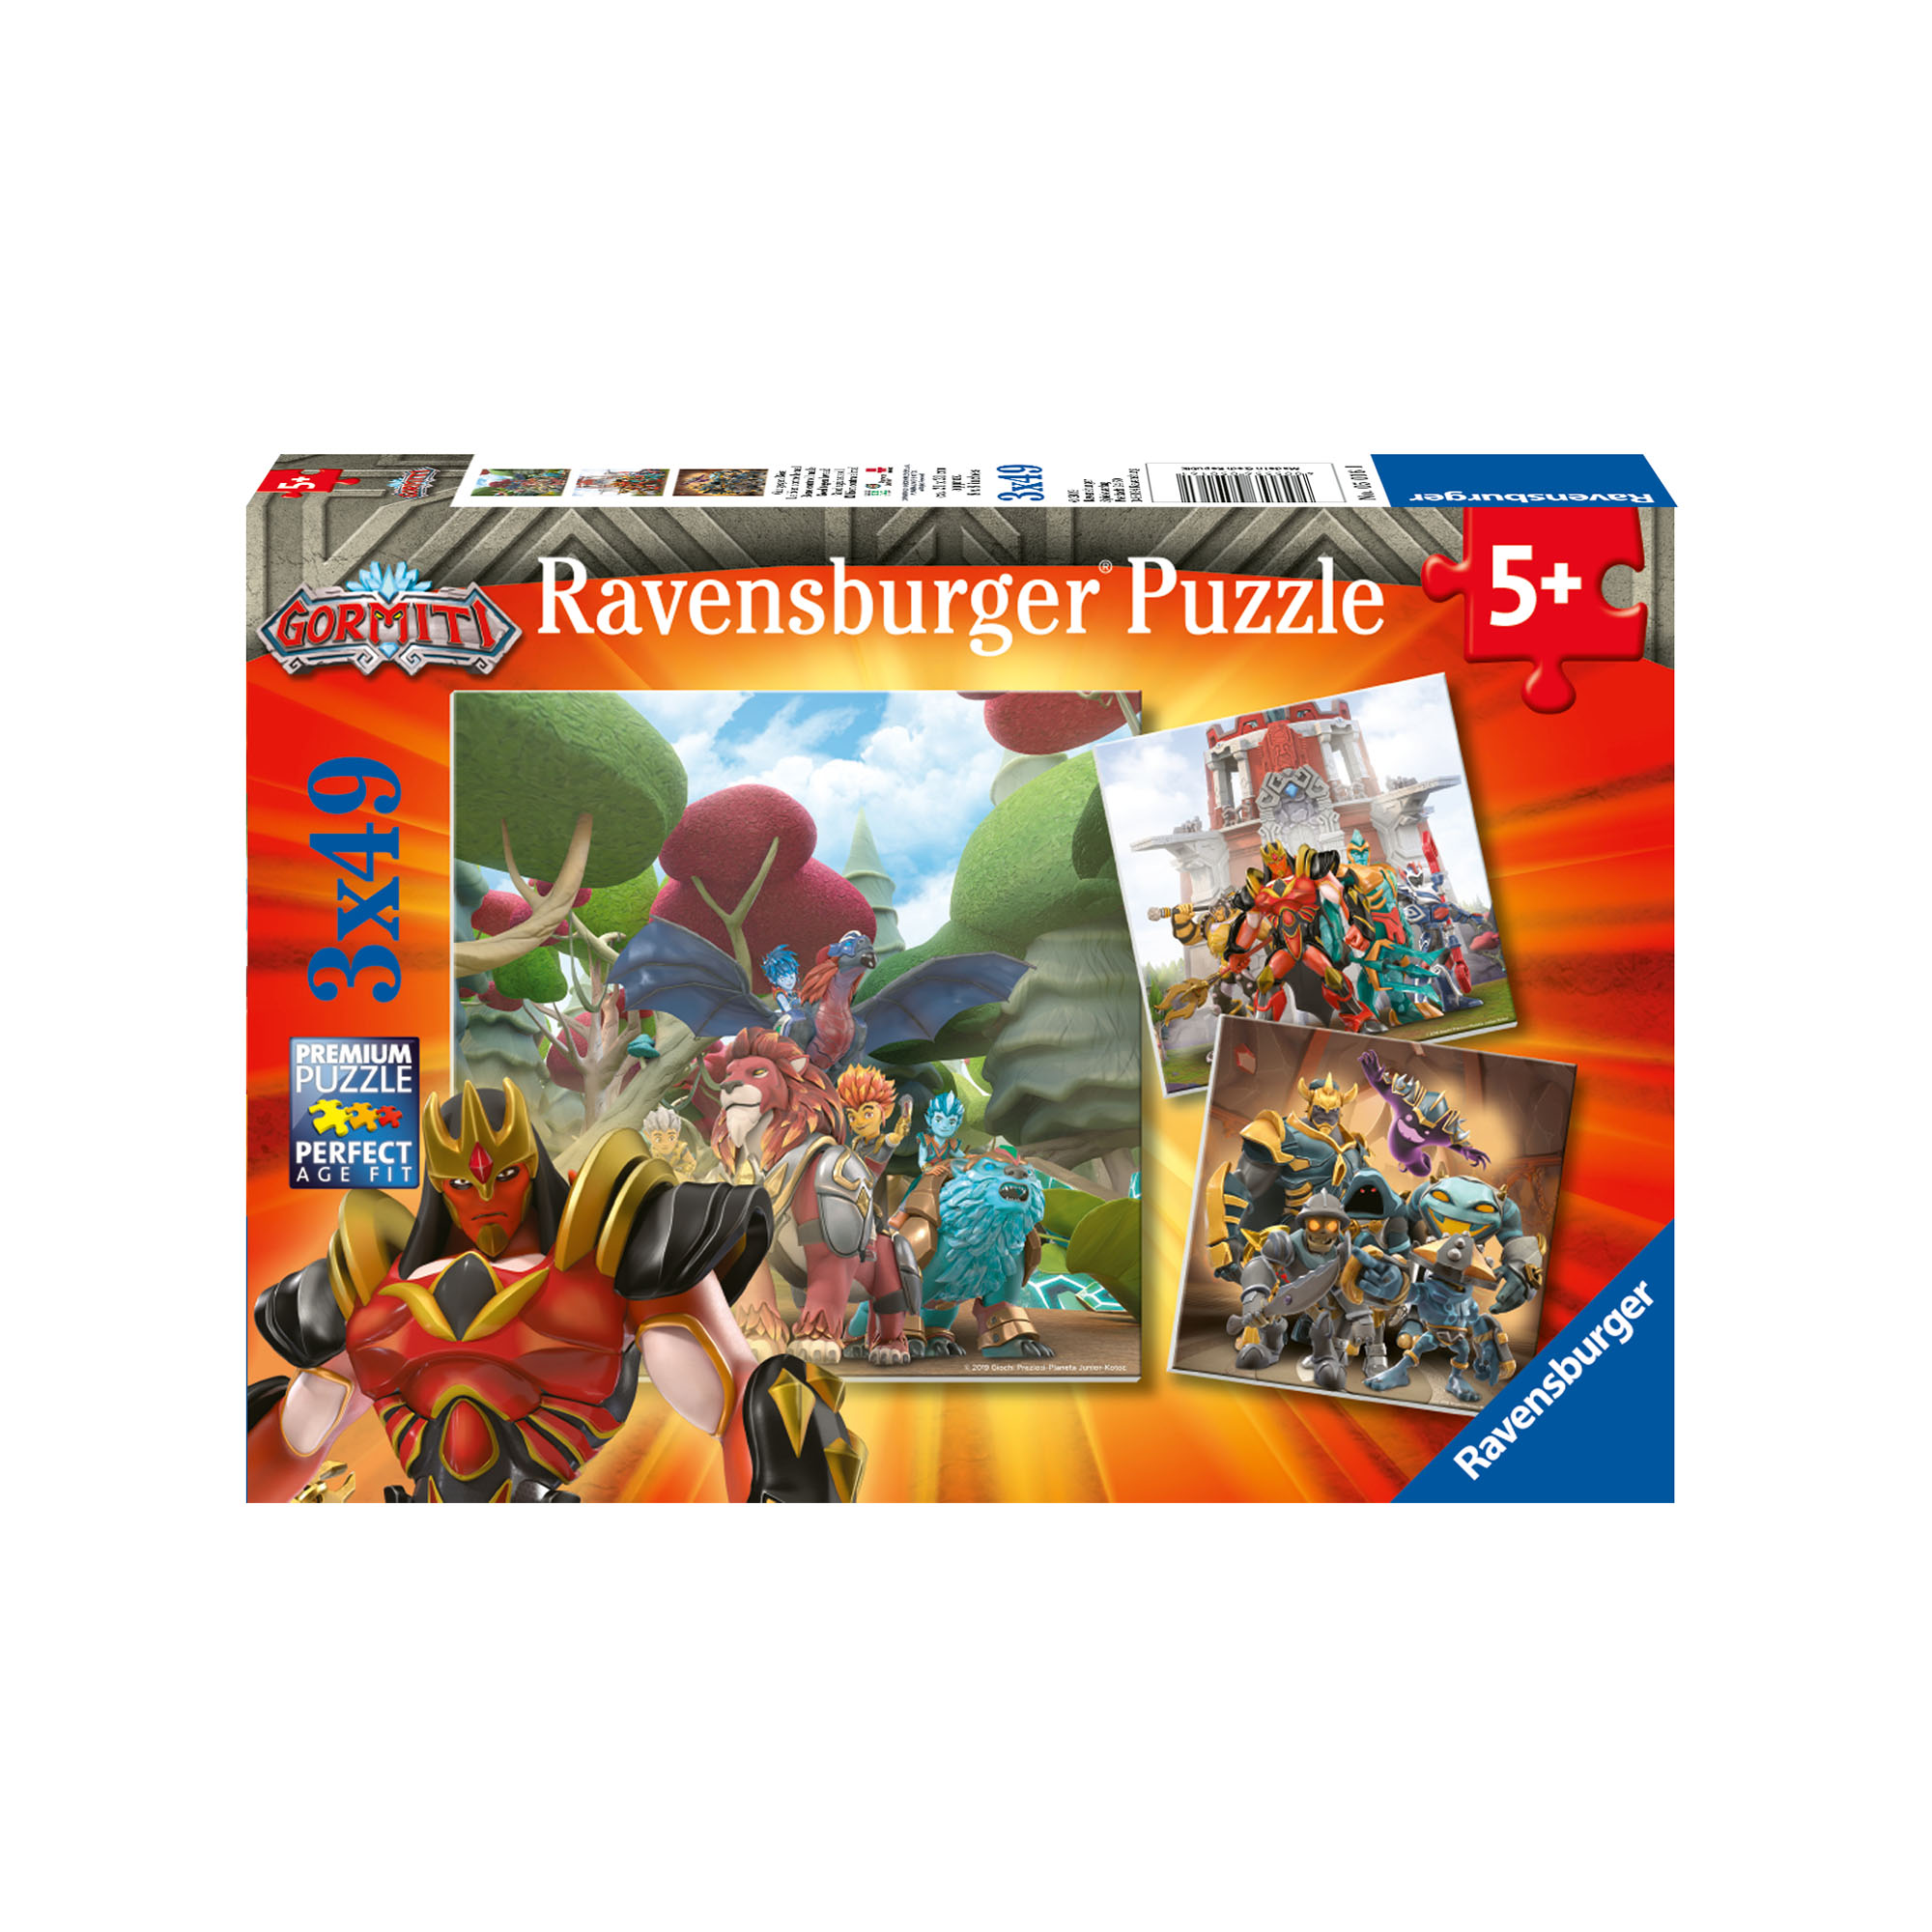 Ravensburger Puzzle 3x49 pezzi 05016 - Gormiti, , large